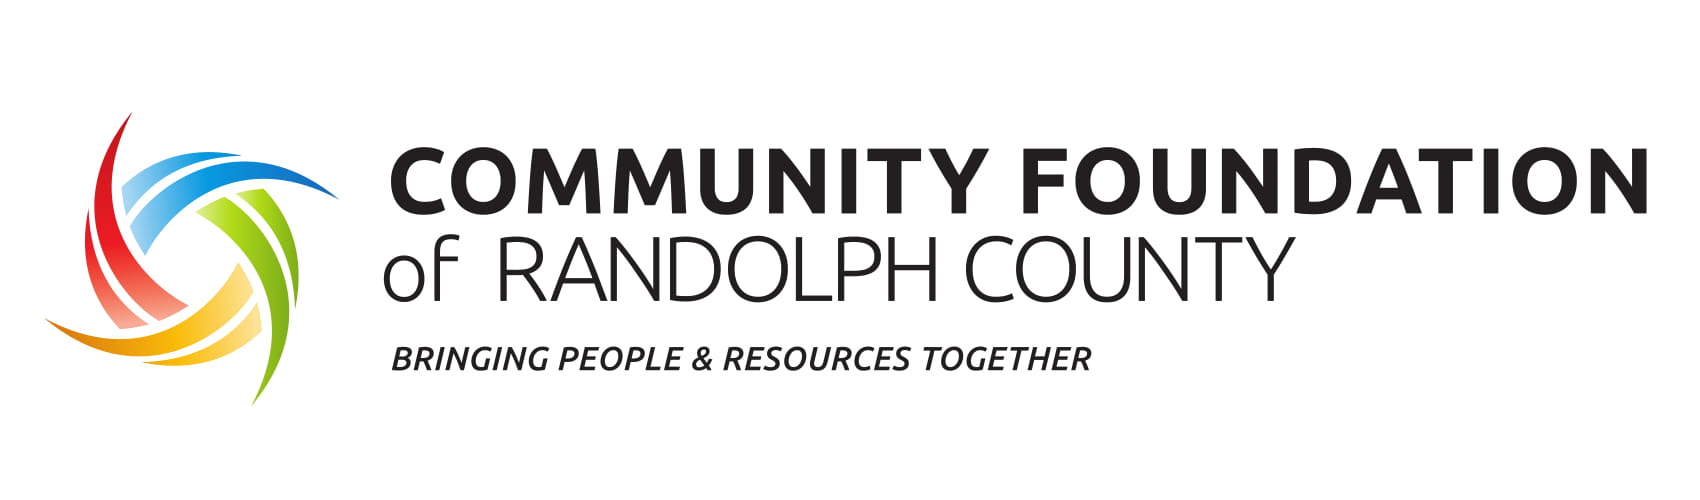 Community Foundation of Randolph County